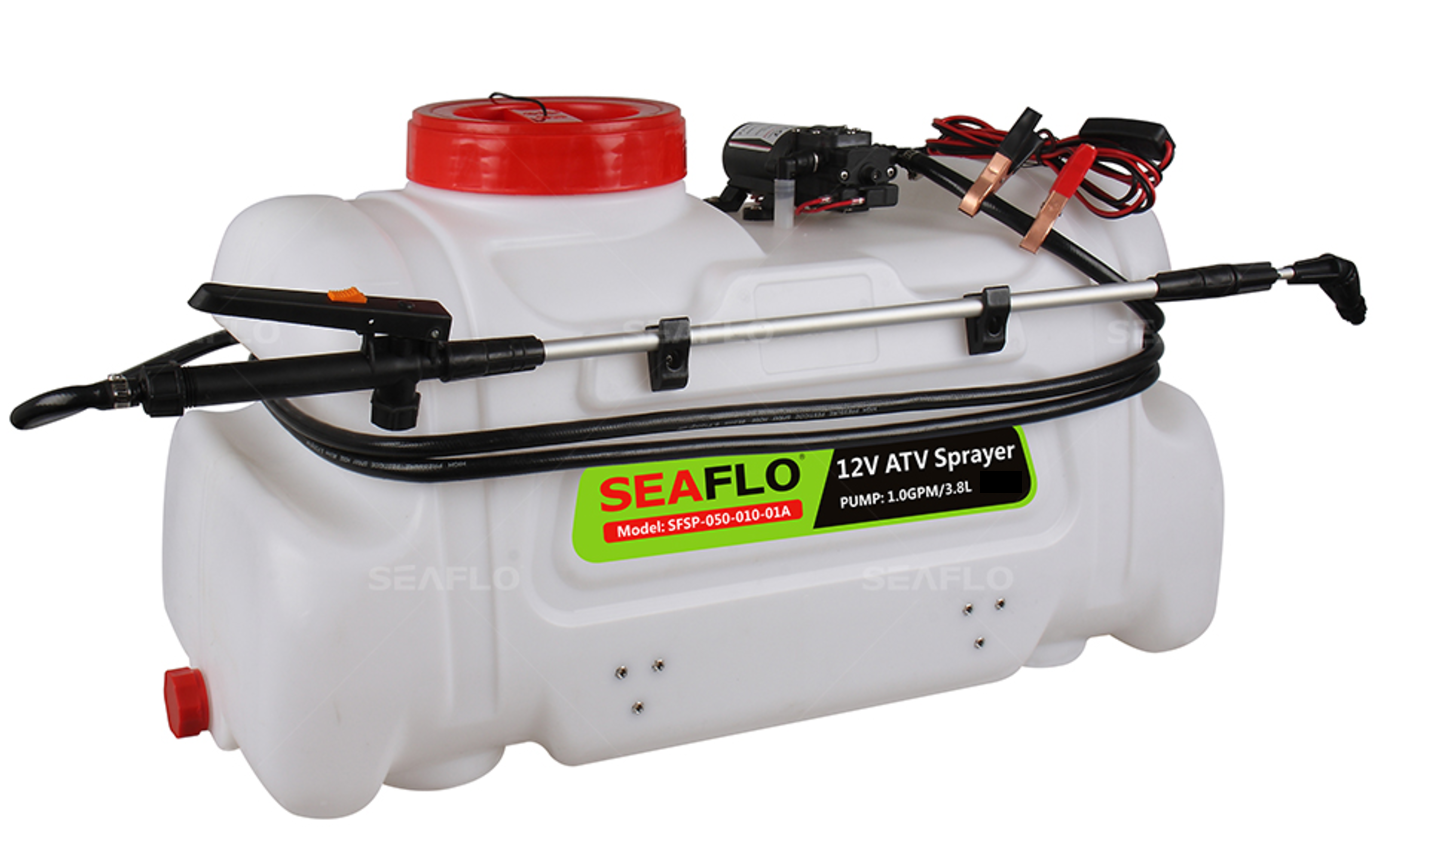 Seaflo ATV Agricultural Electric Spot Sprayer 13 Gallon 80 psi 1 GPM 